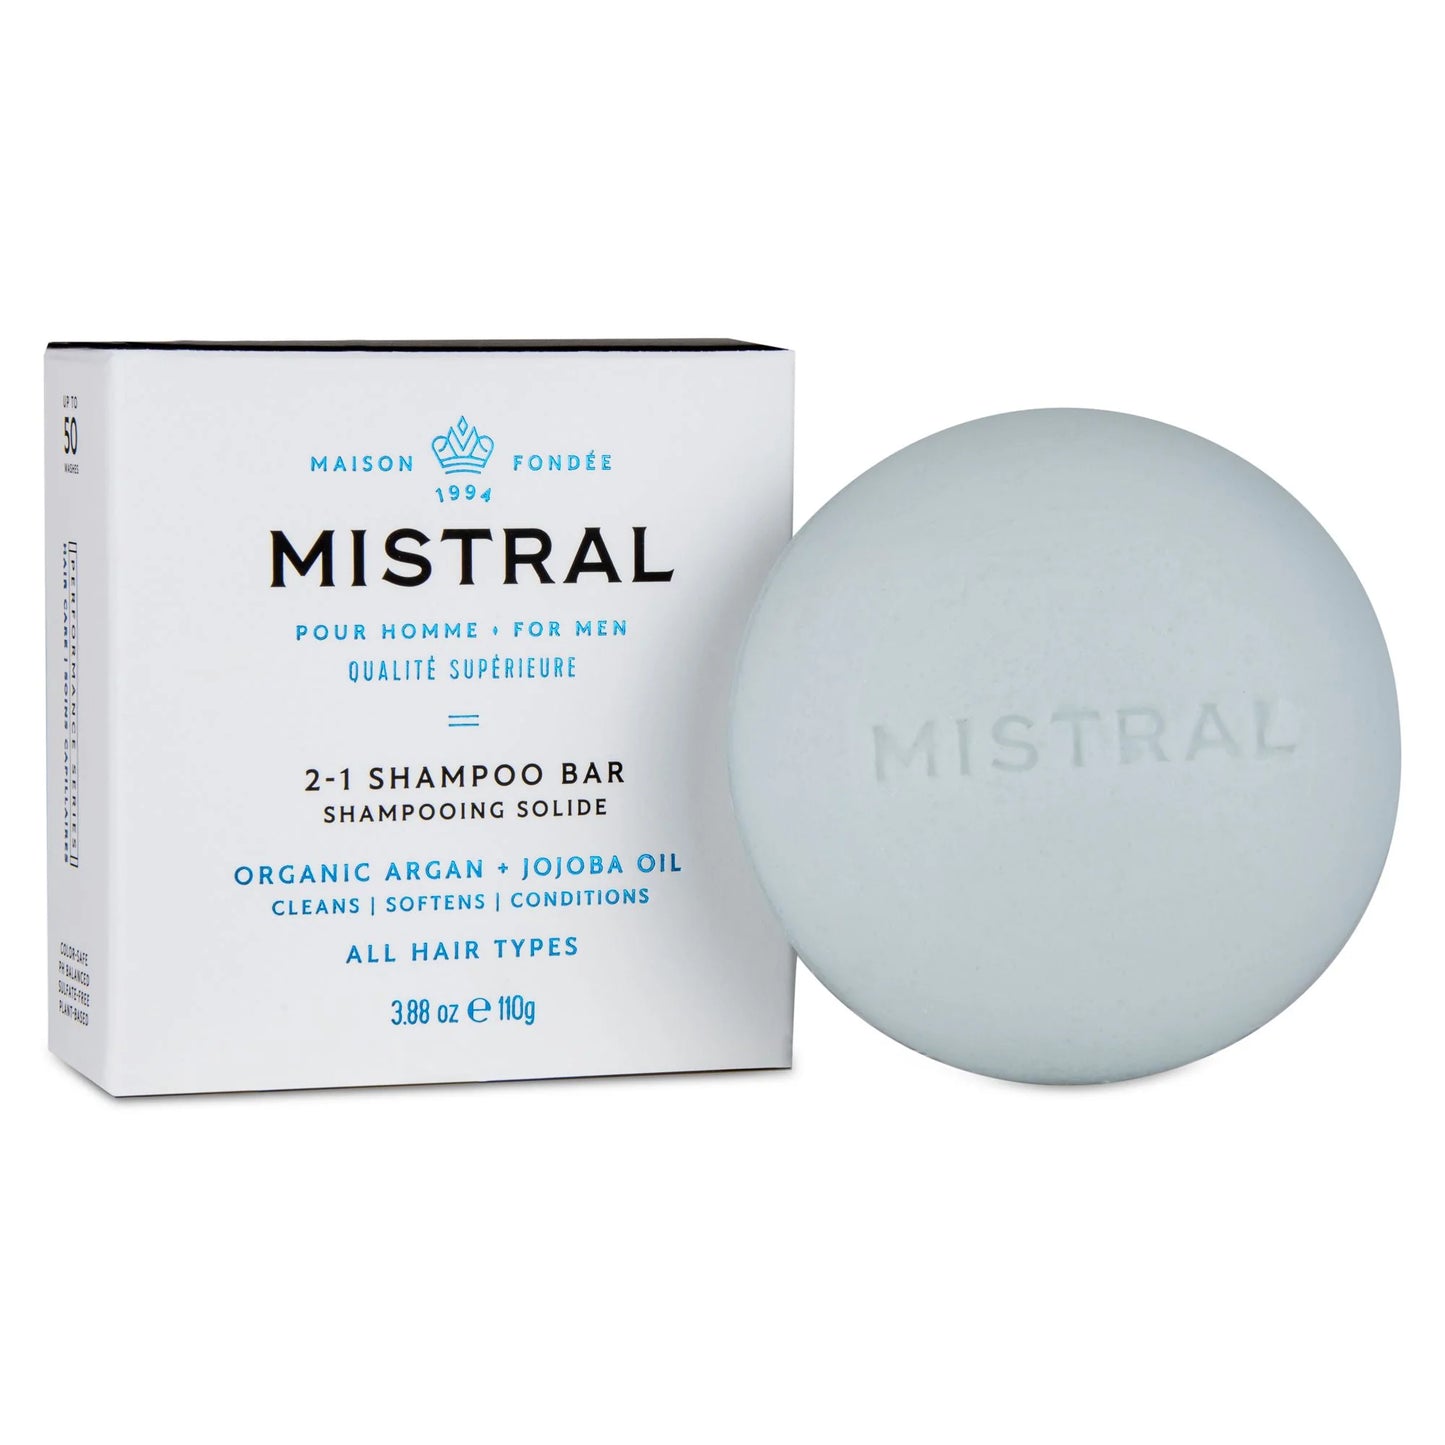 Primary Image of Mistral 2-1 Shampoo Bar (3.88 oz)